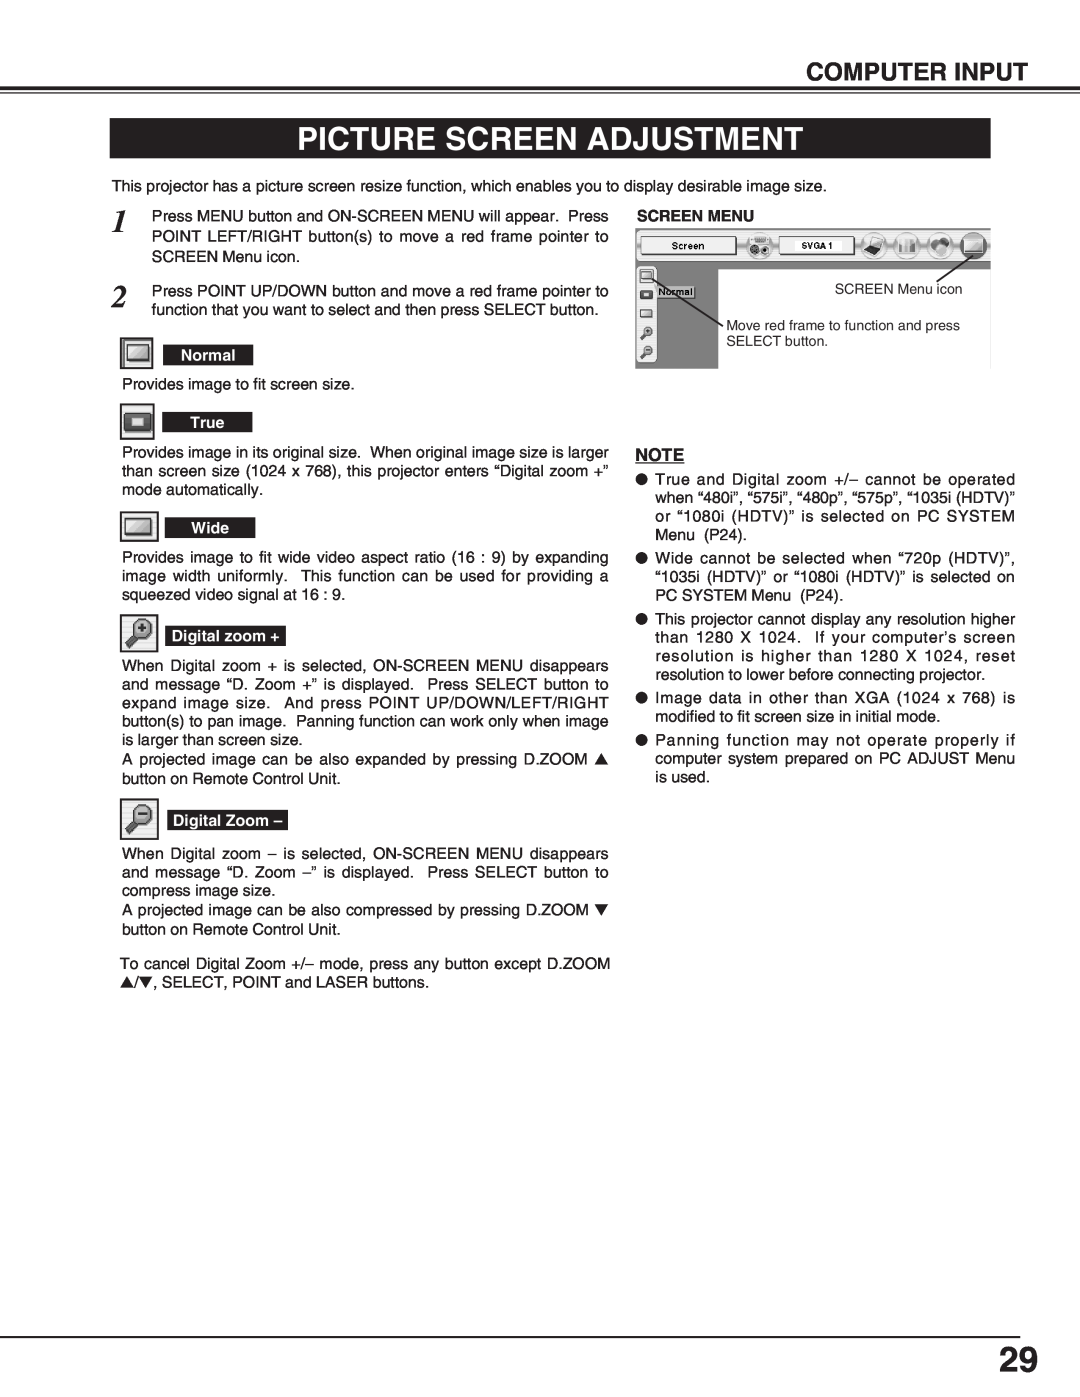 Eiki LC-X70 instruction manual Picture Screen Adjustment, Screen Menu 